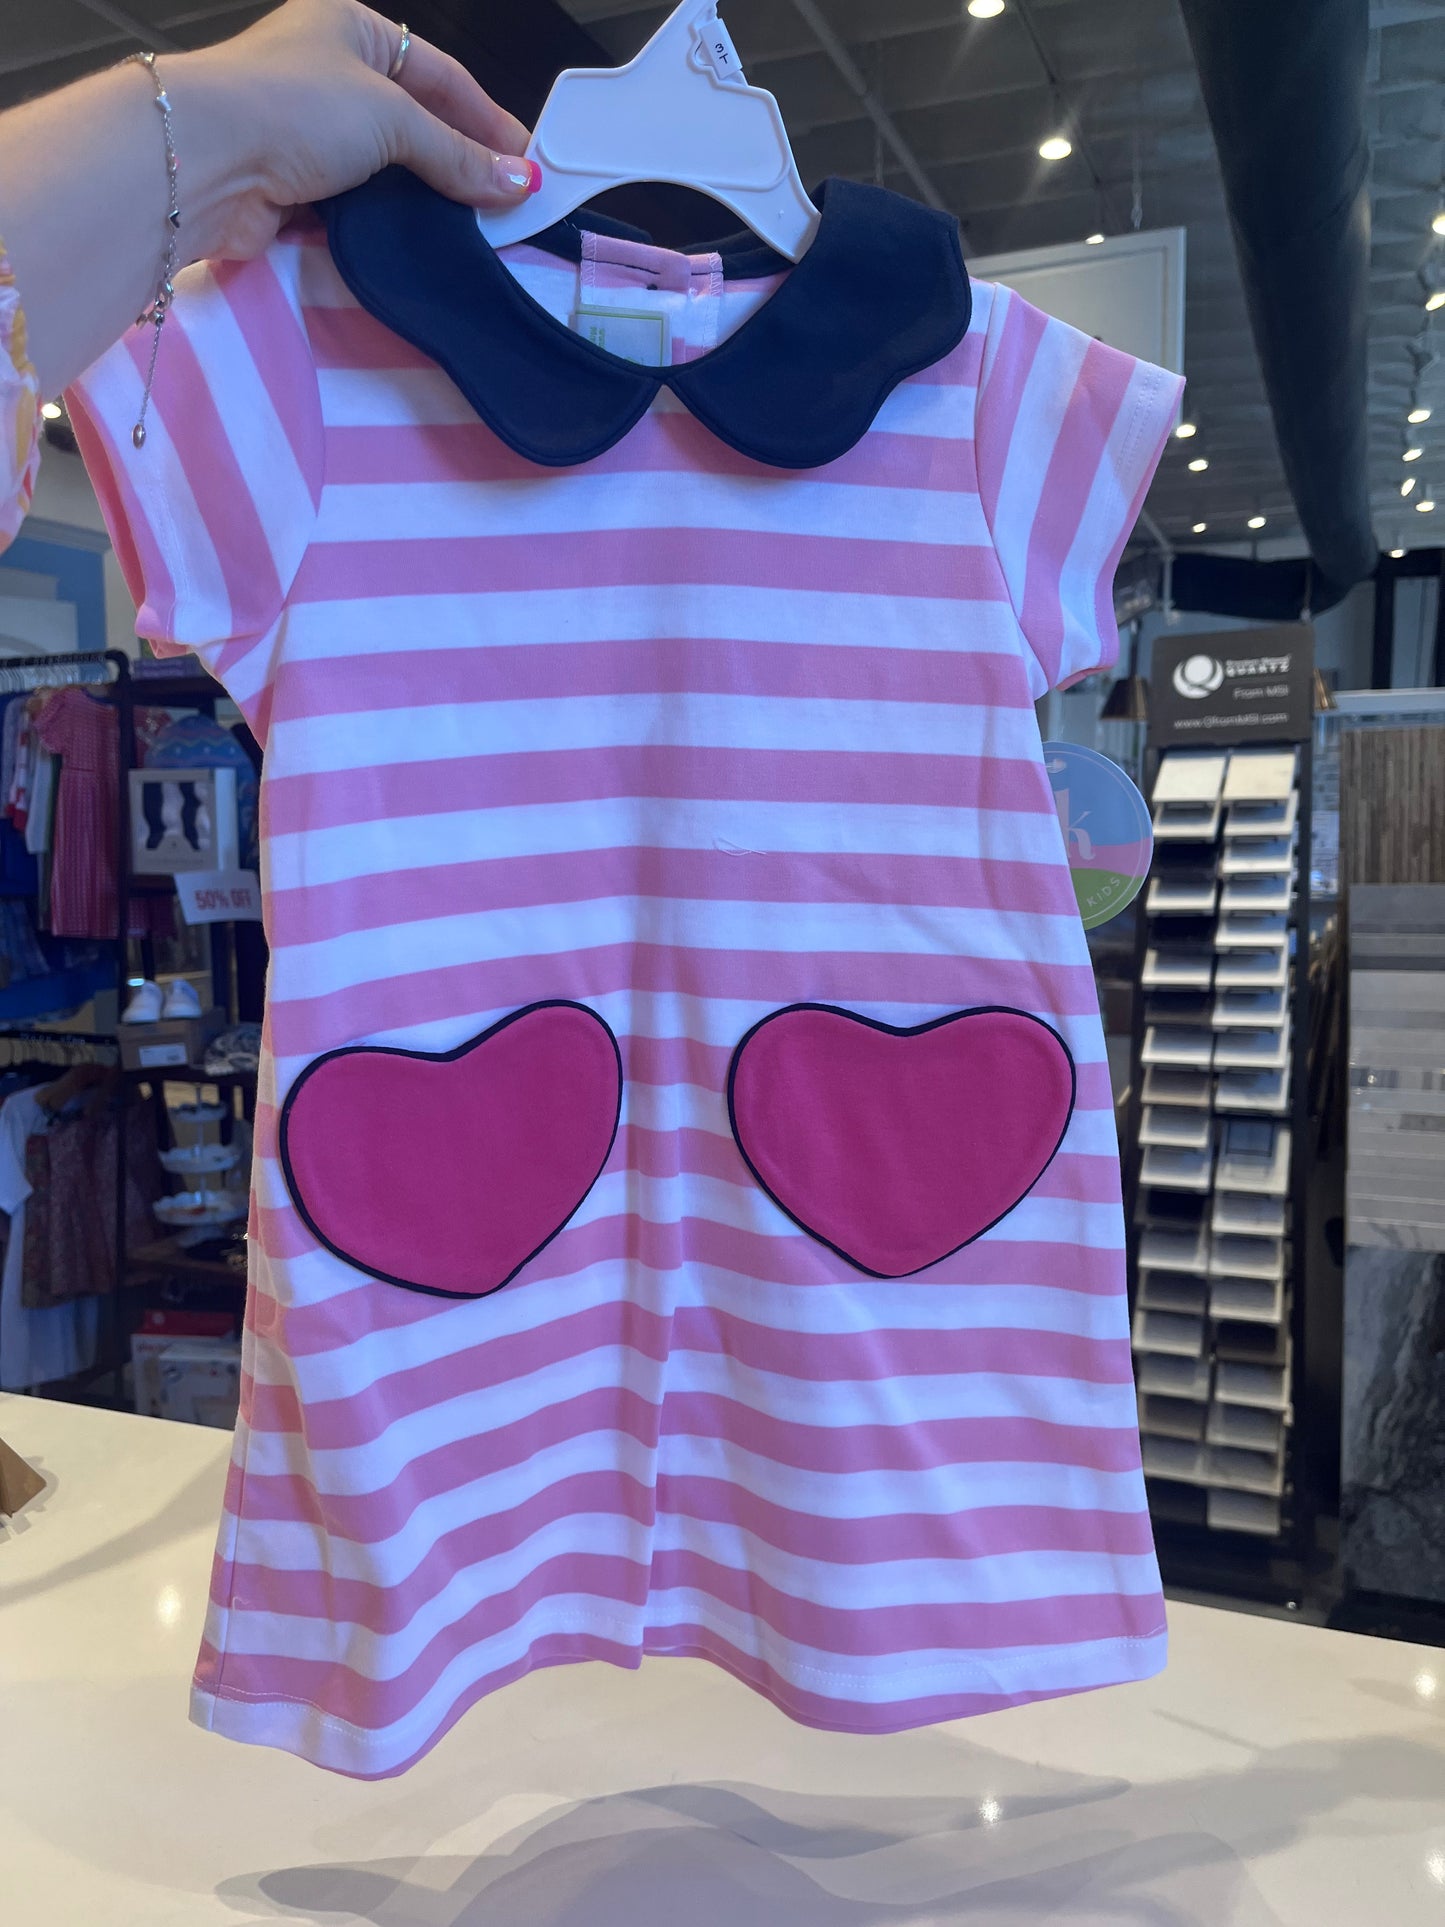 Zuccini Kids Pink & Black Heart Applique Dress